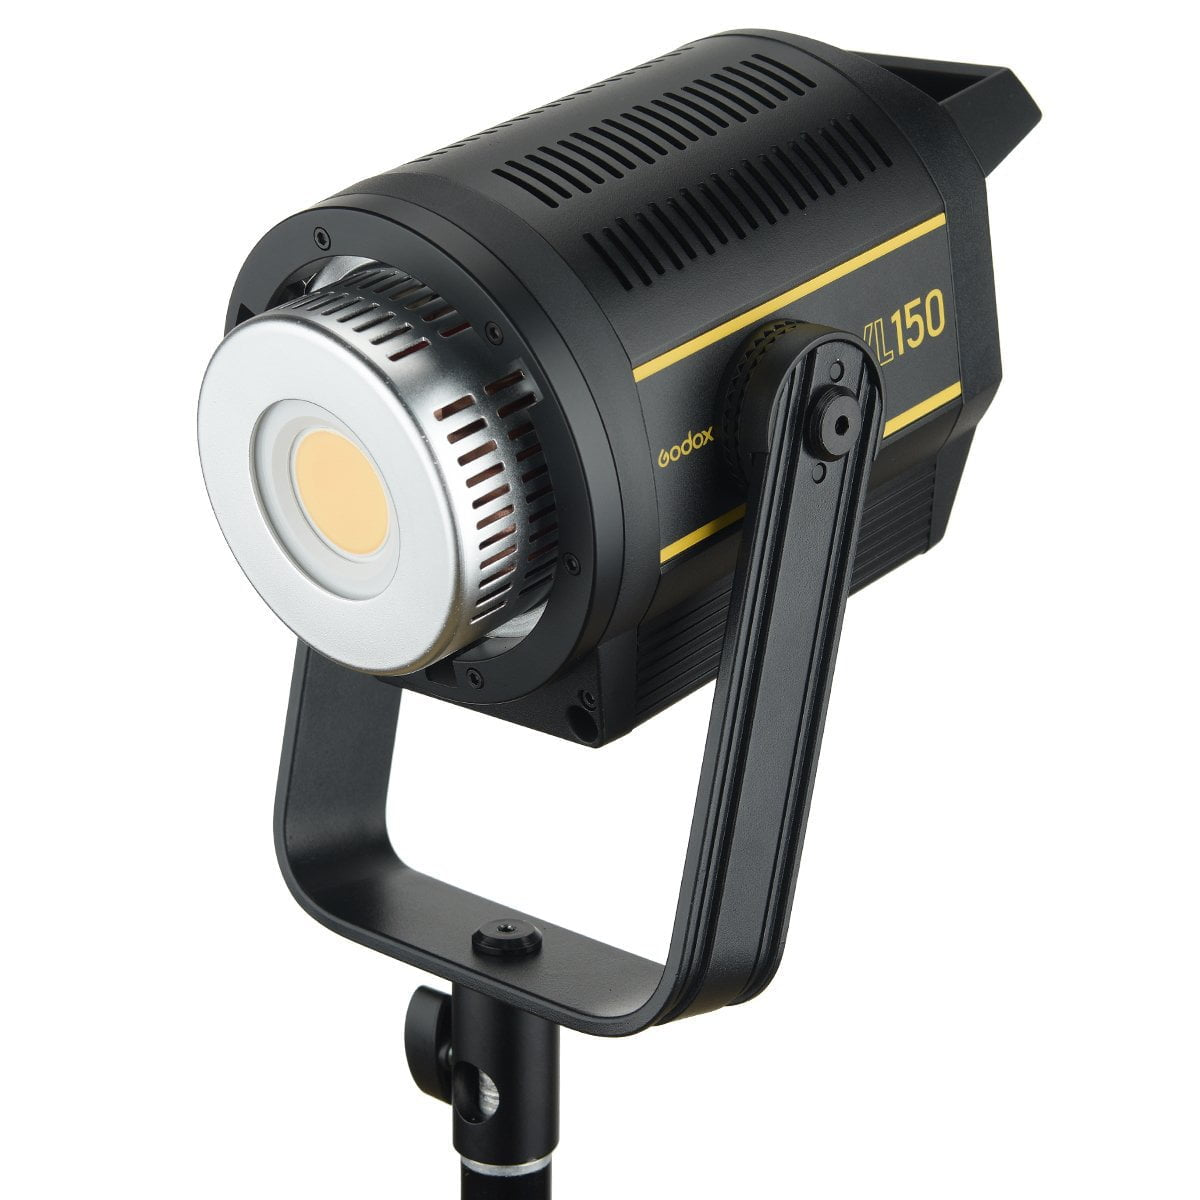 Clearance Used - Godox VL150 150W COB LED Video Light